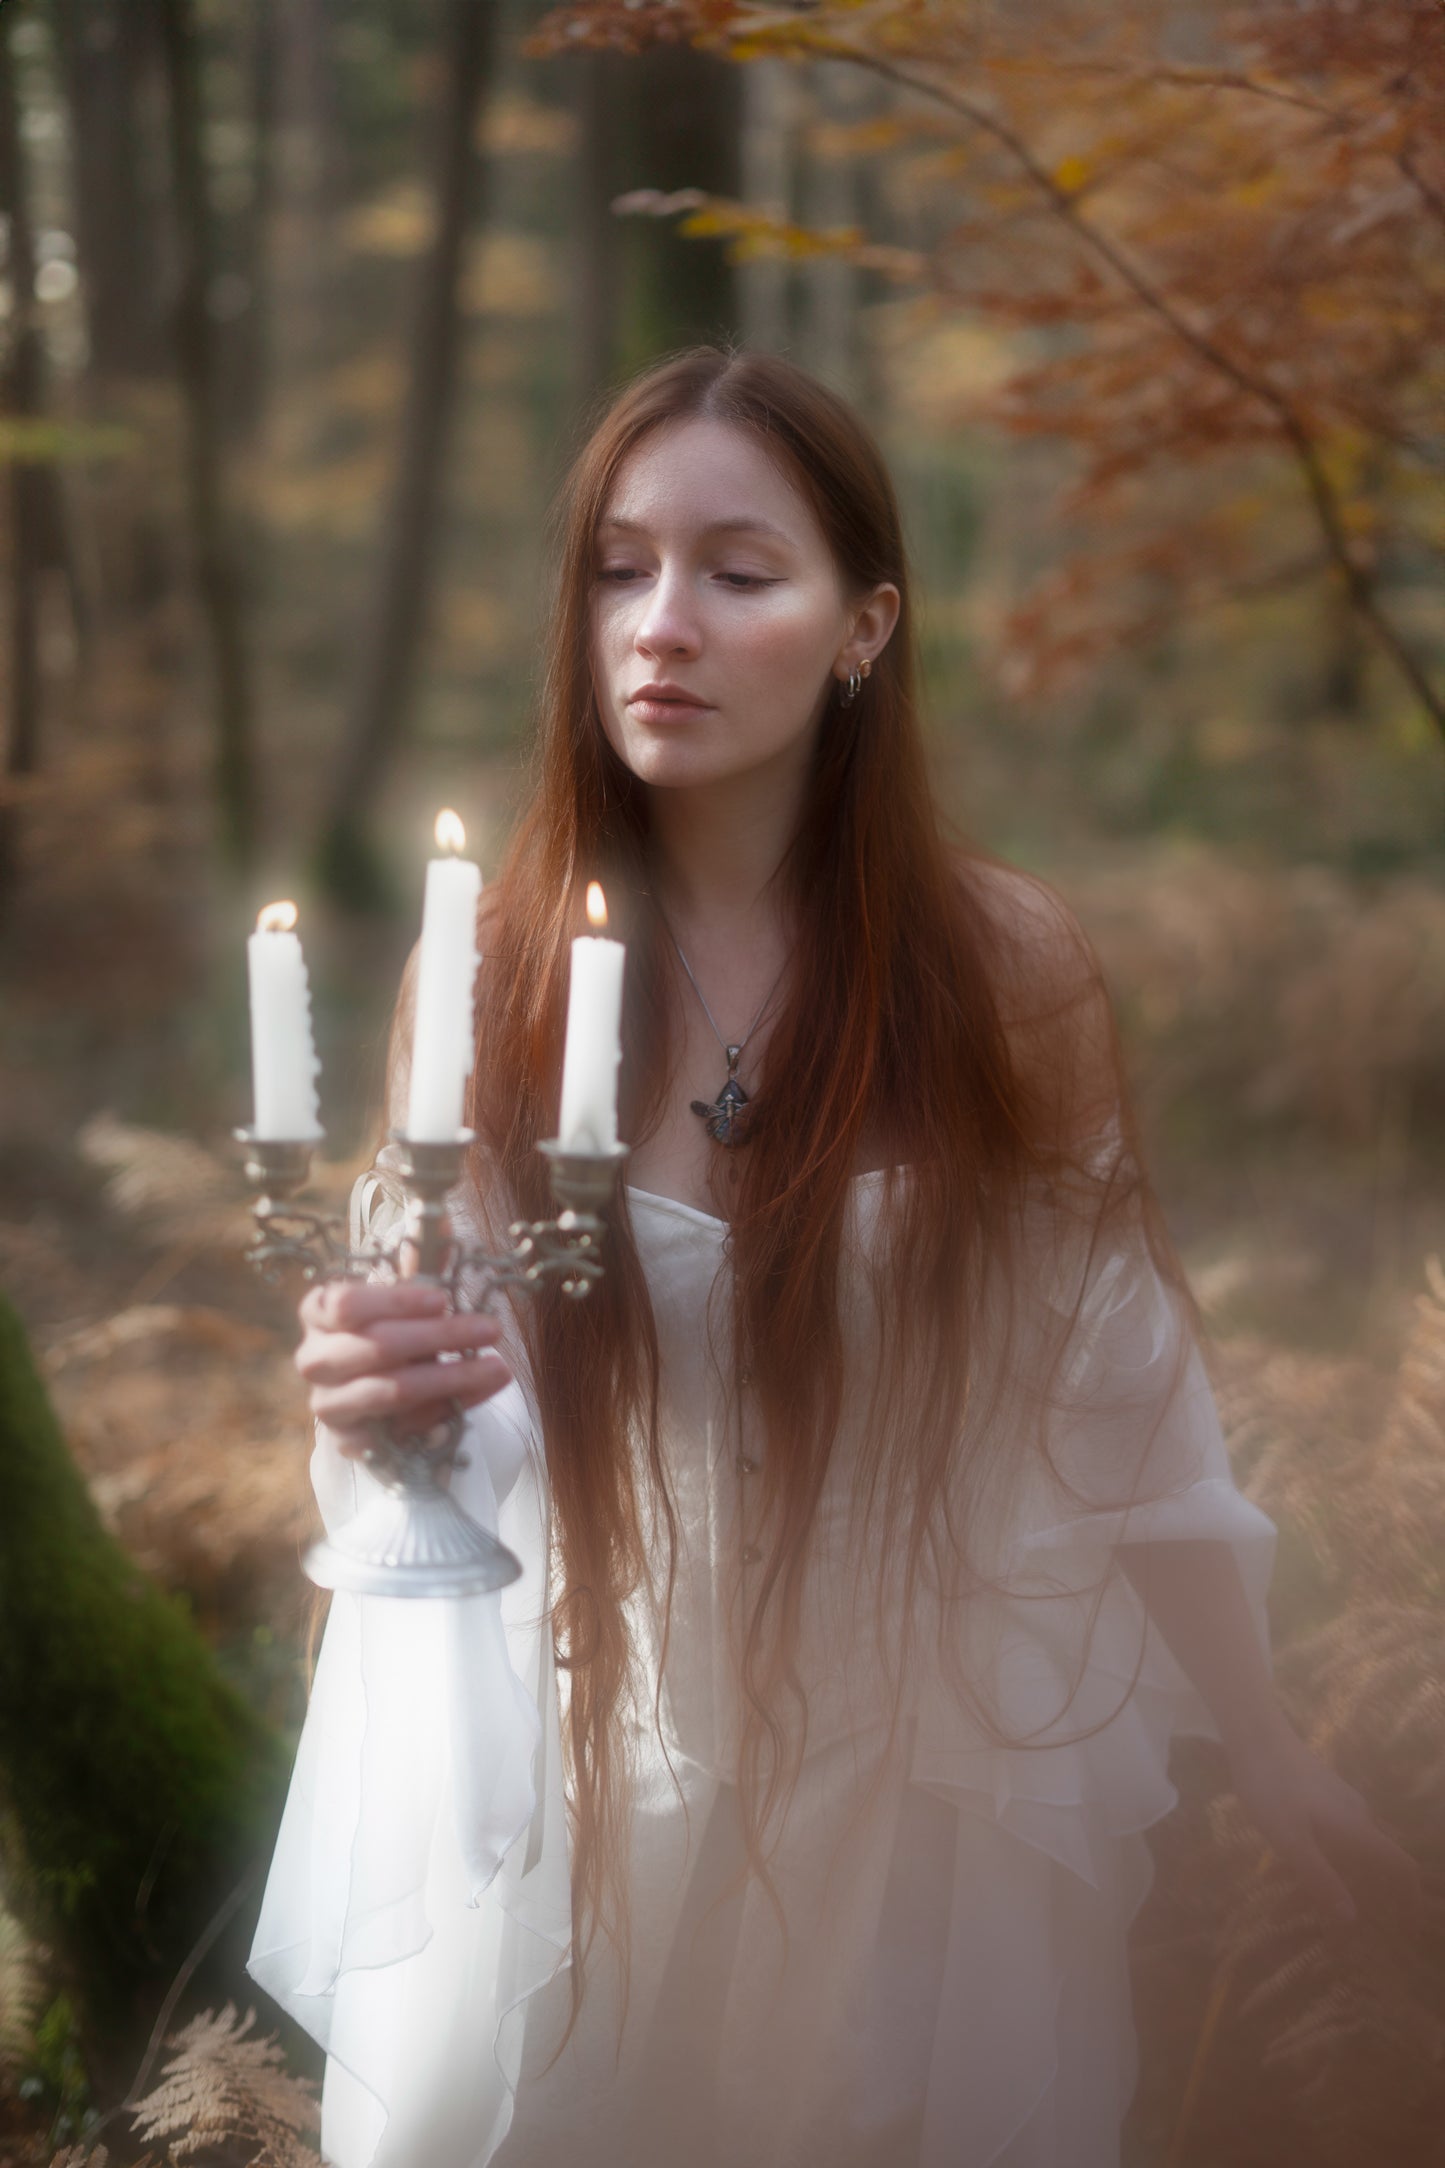 Ethereal elven wedding dress